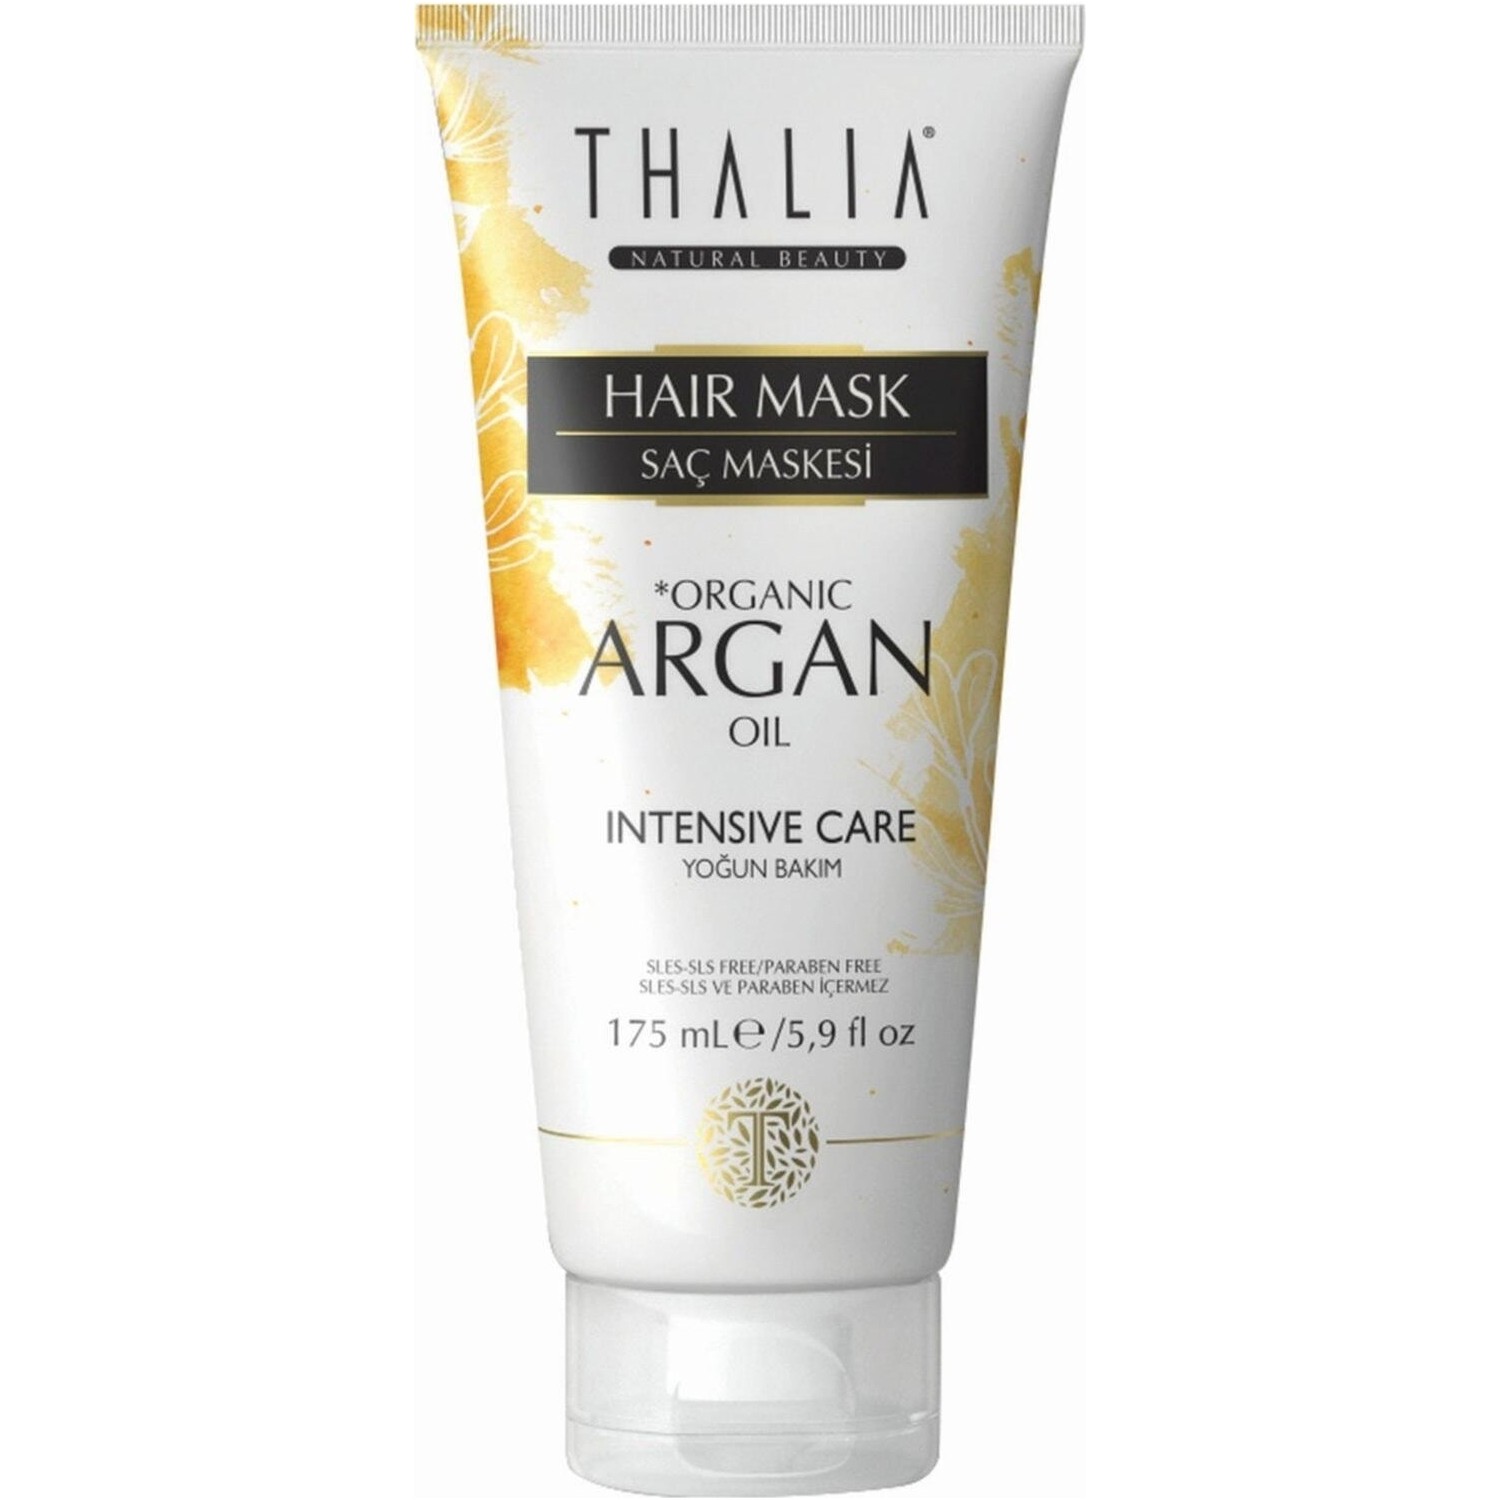 цена Увлажняющая маска Thalia Organic Argan Oil для волос, 175 мл